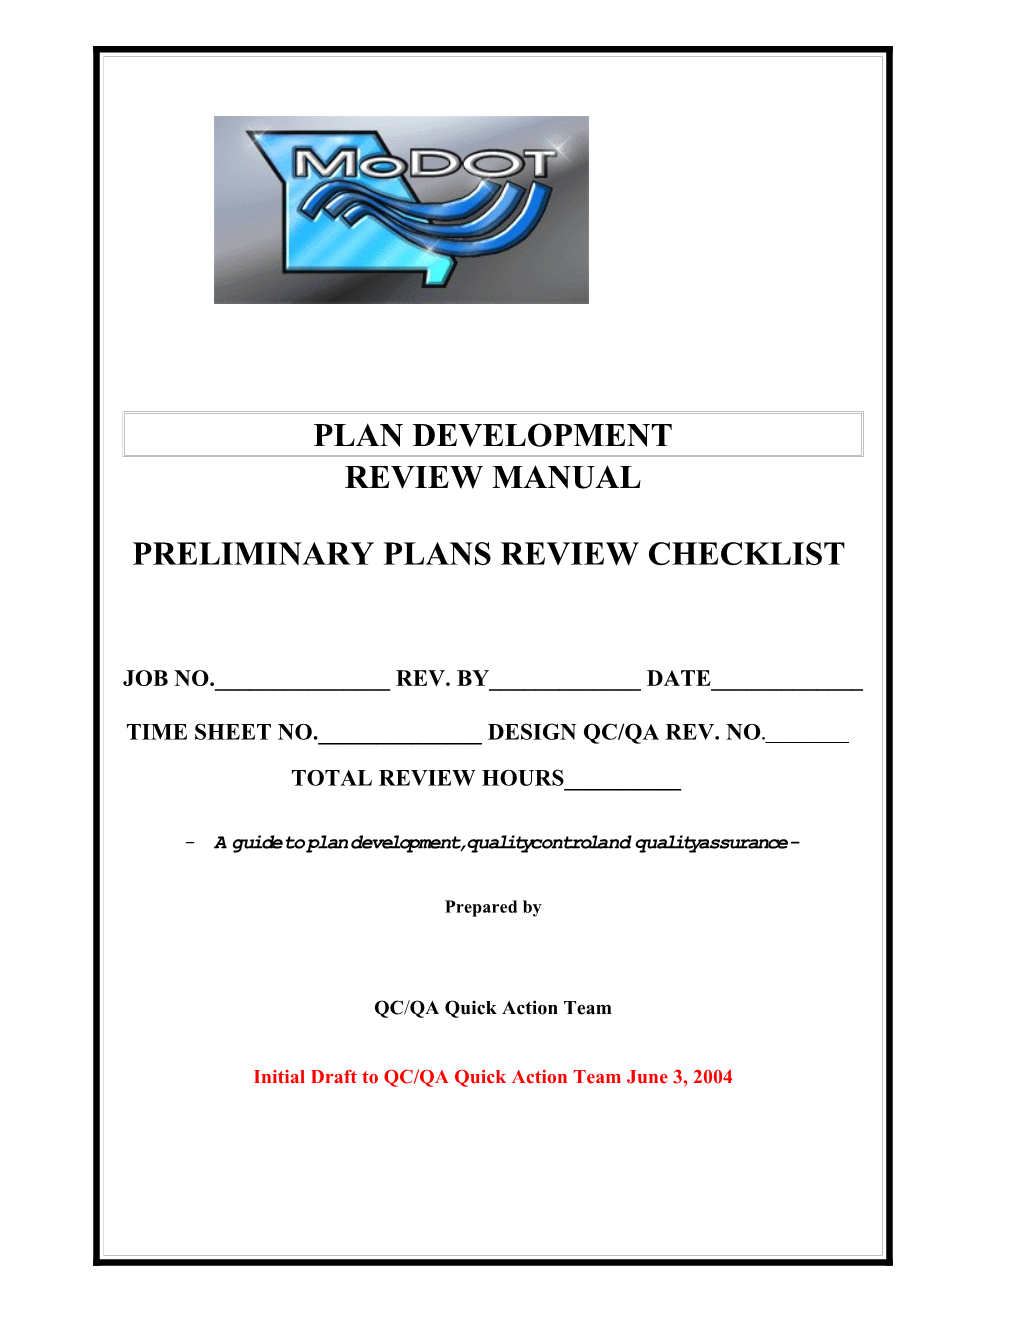 Preliminary Plans Review Checklist